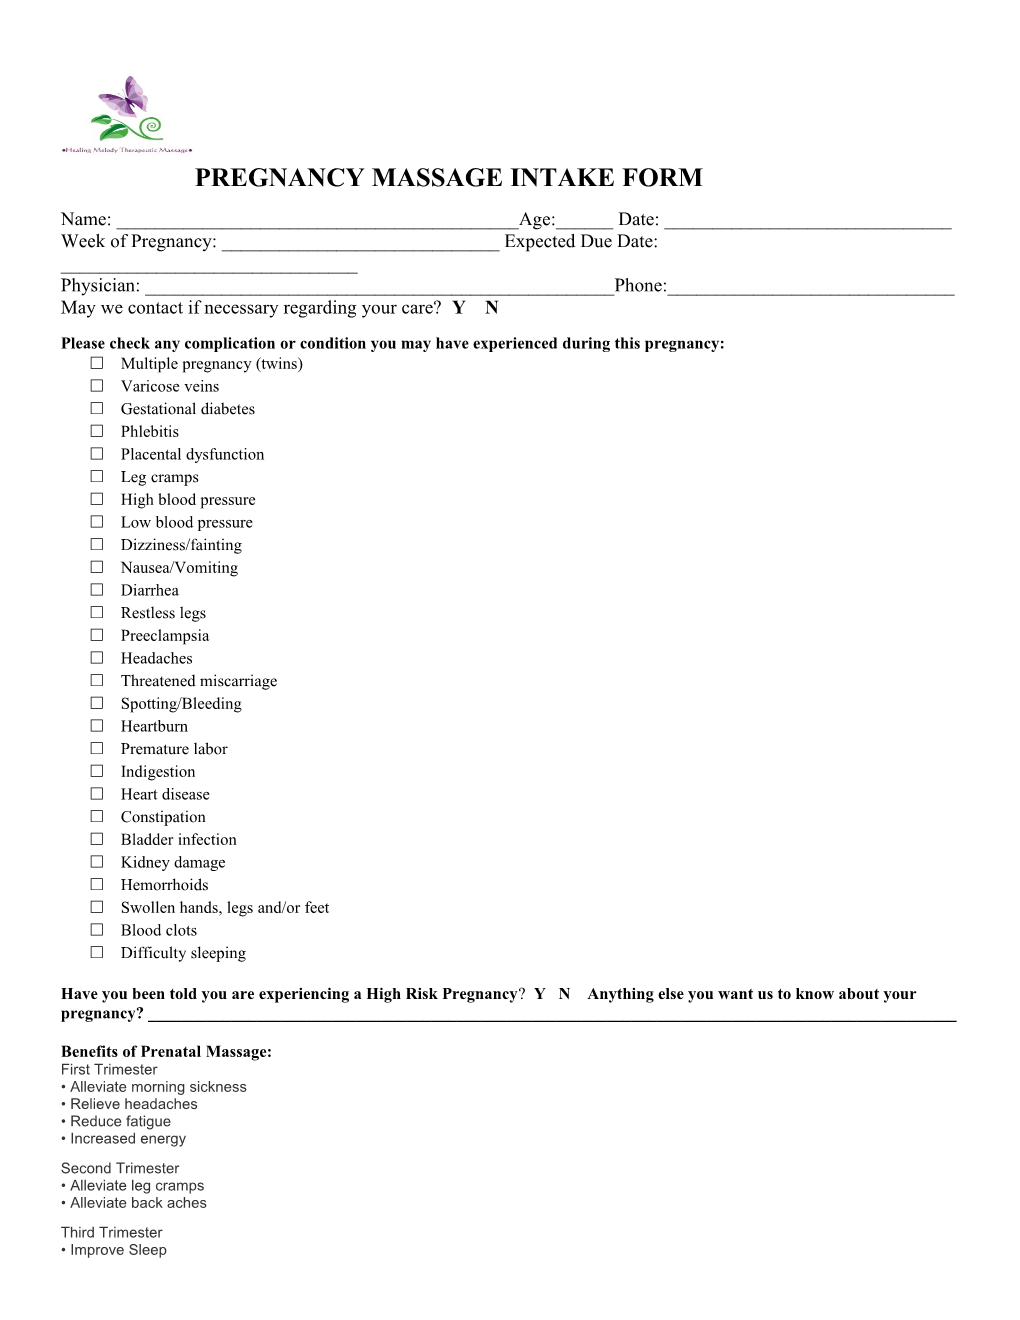 Pregnancy Massage Intake Form